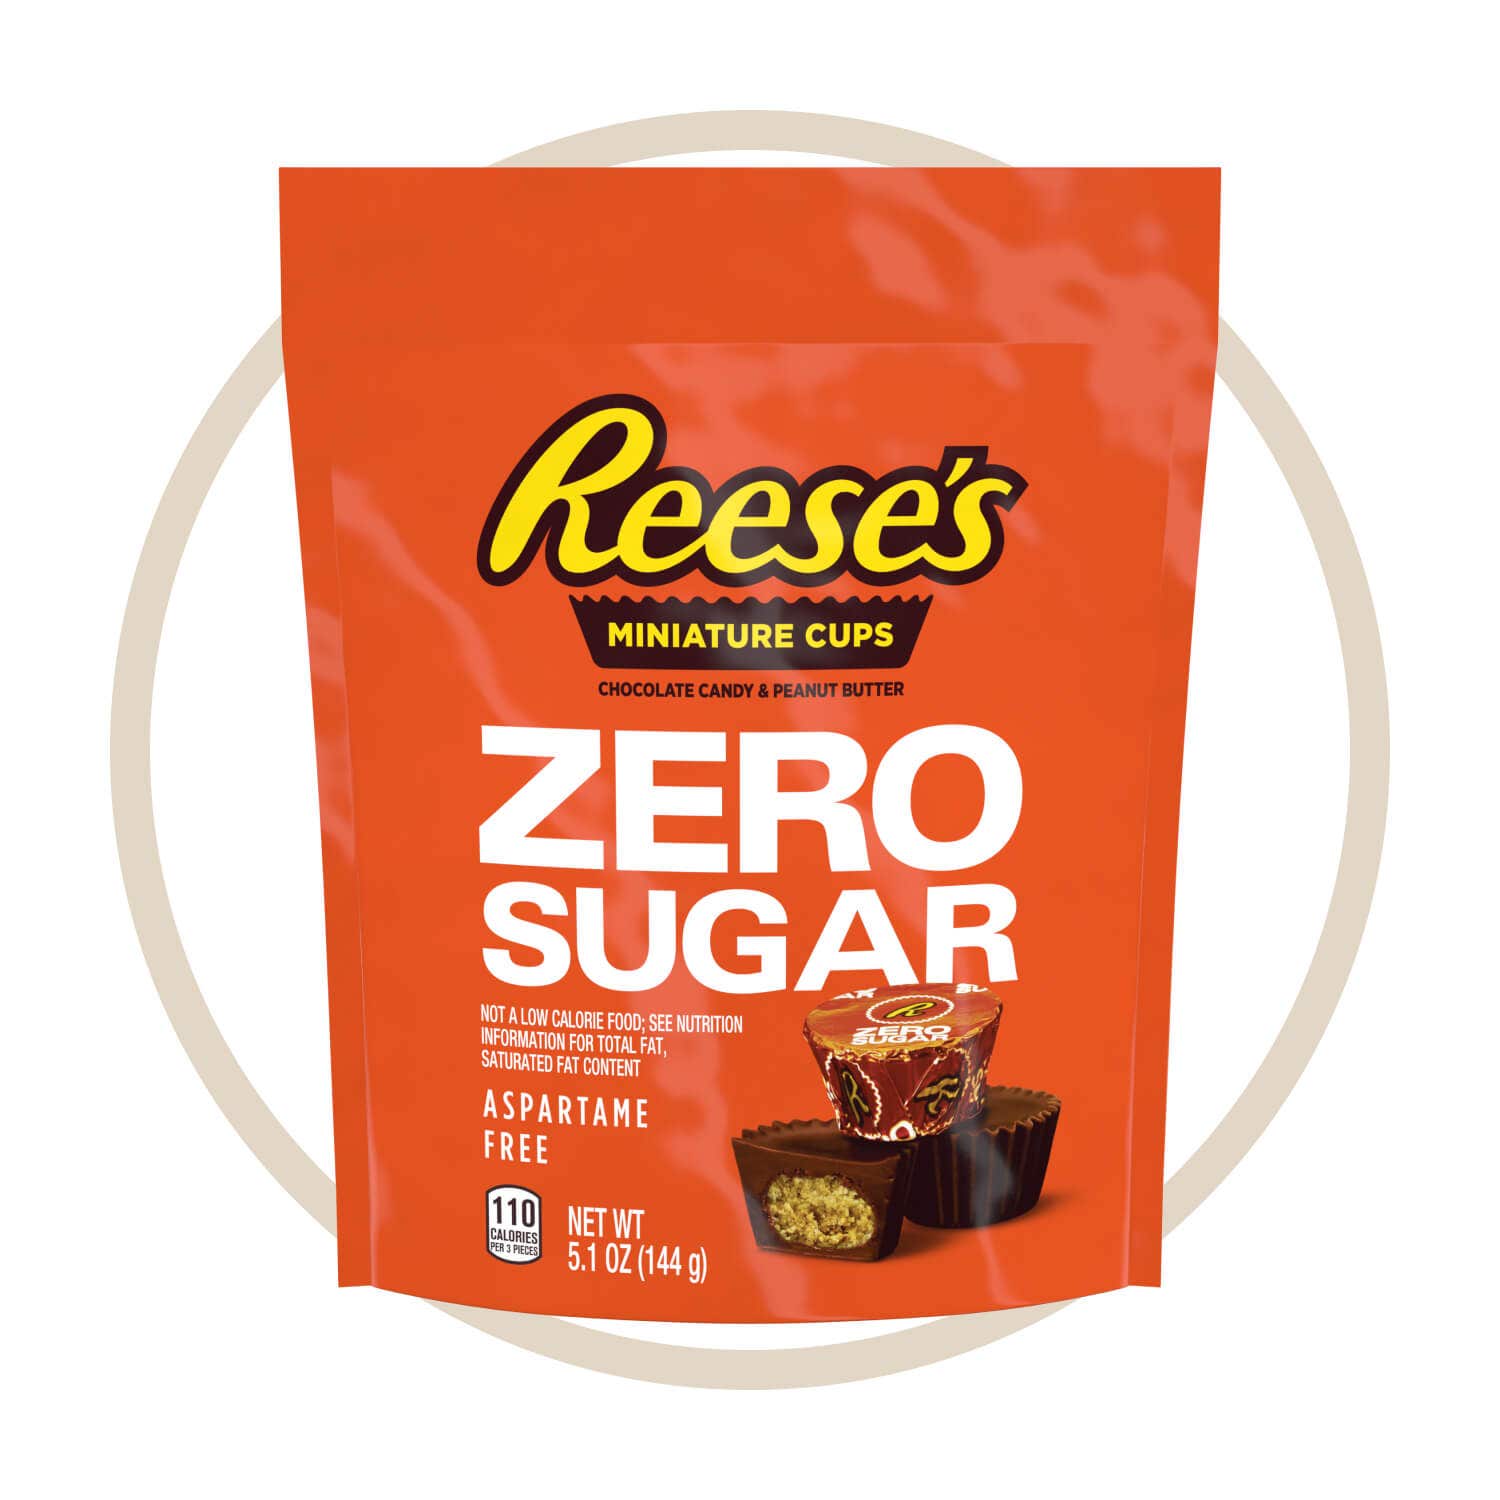 bag of reeese's zero sugar miniature cups